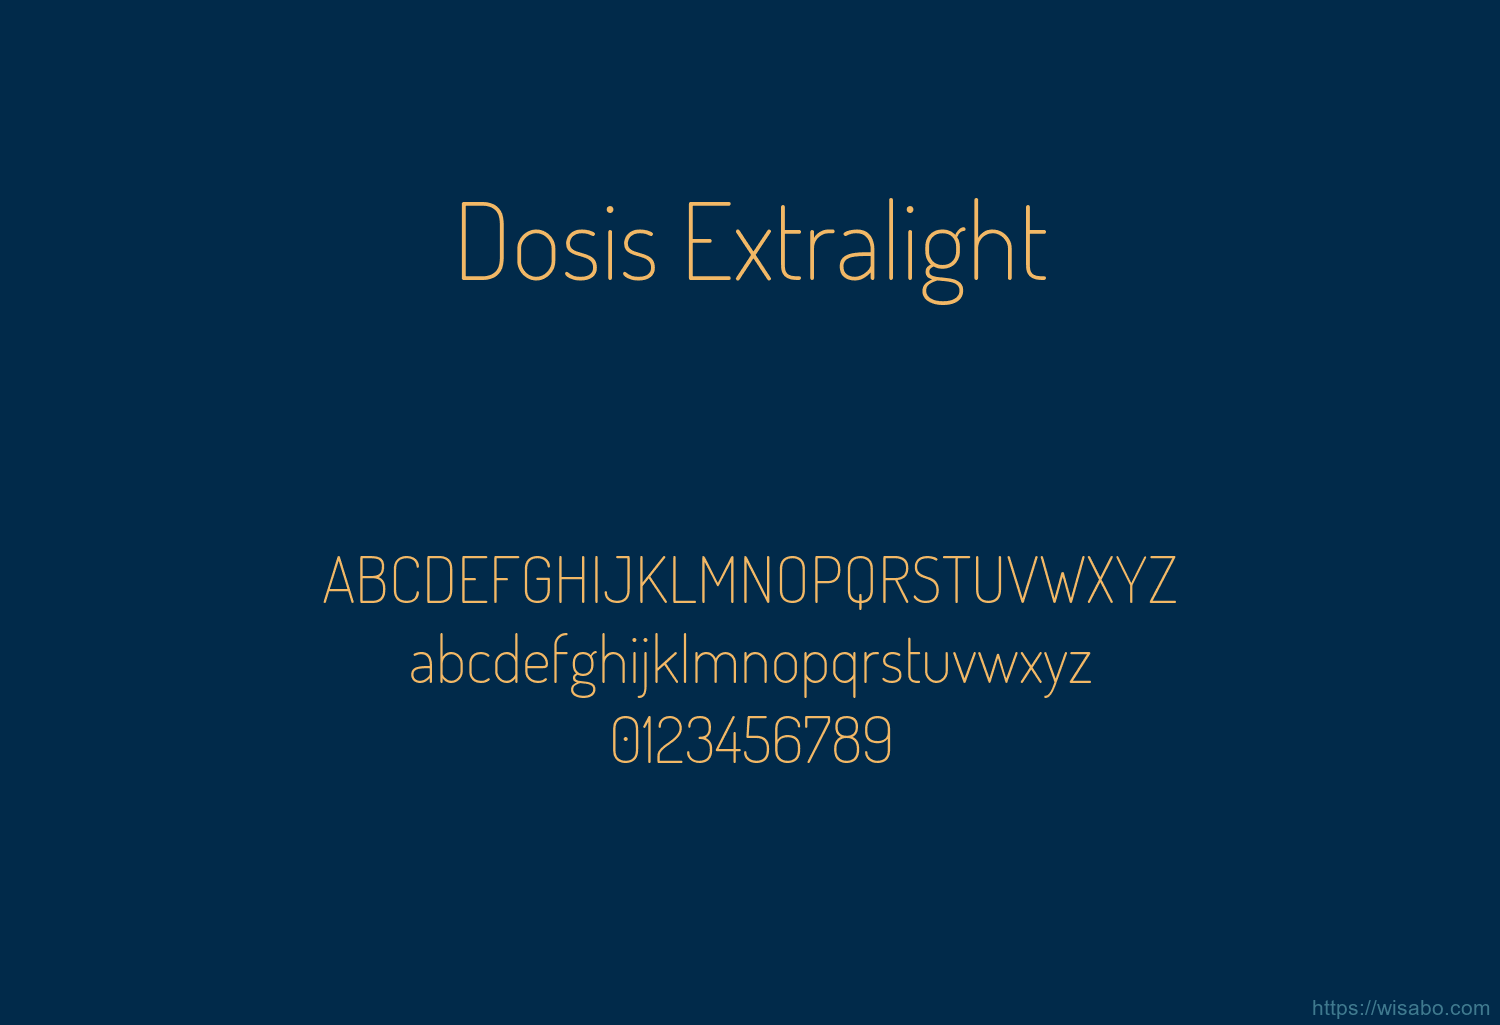 Dosis Extralight